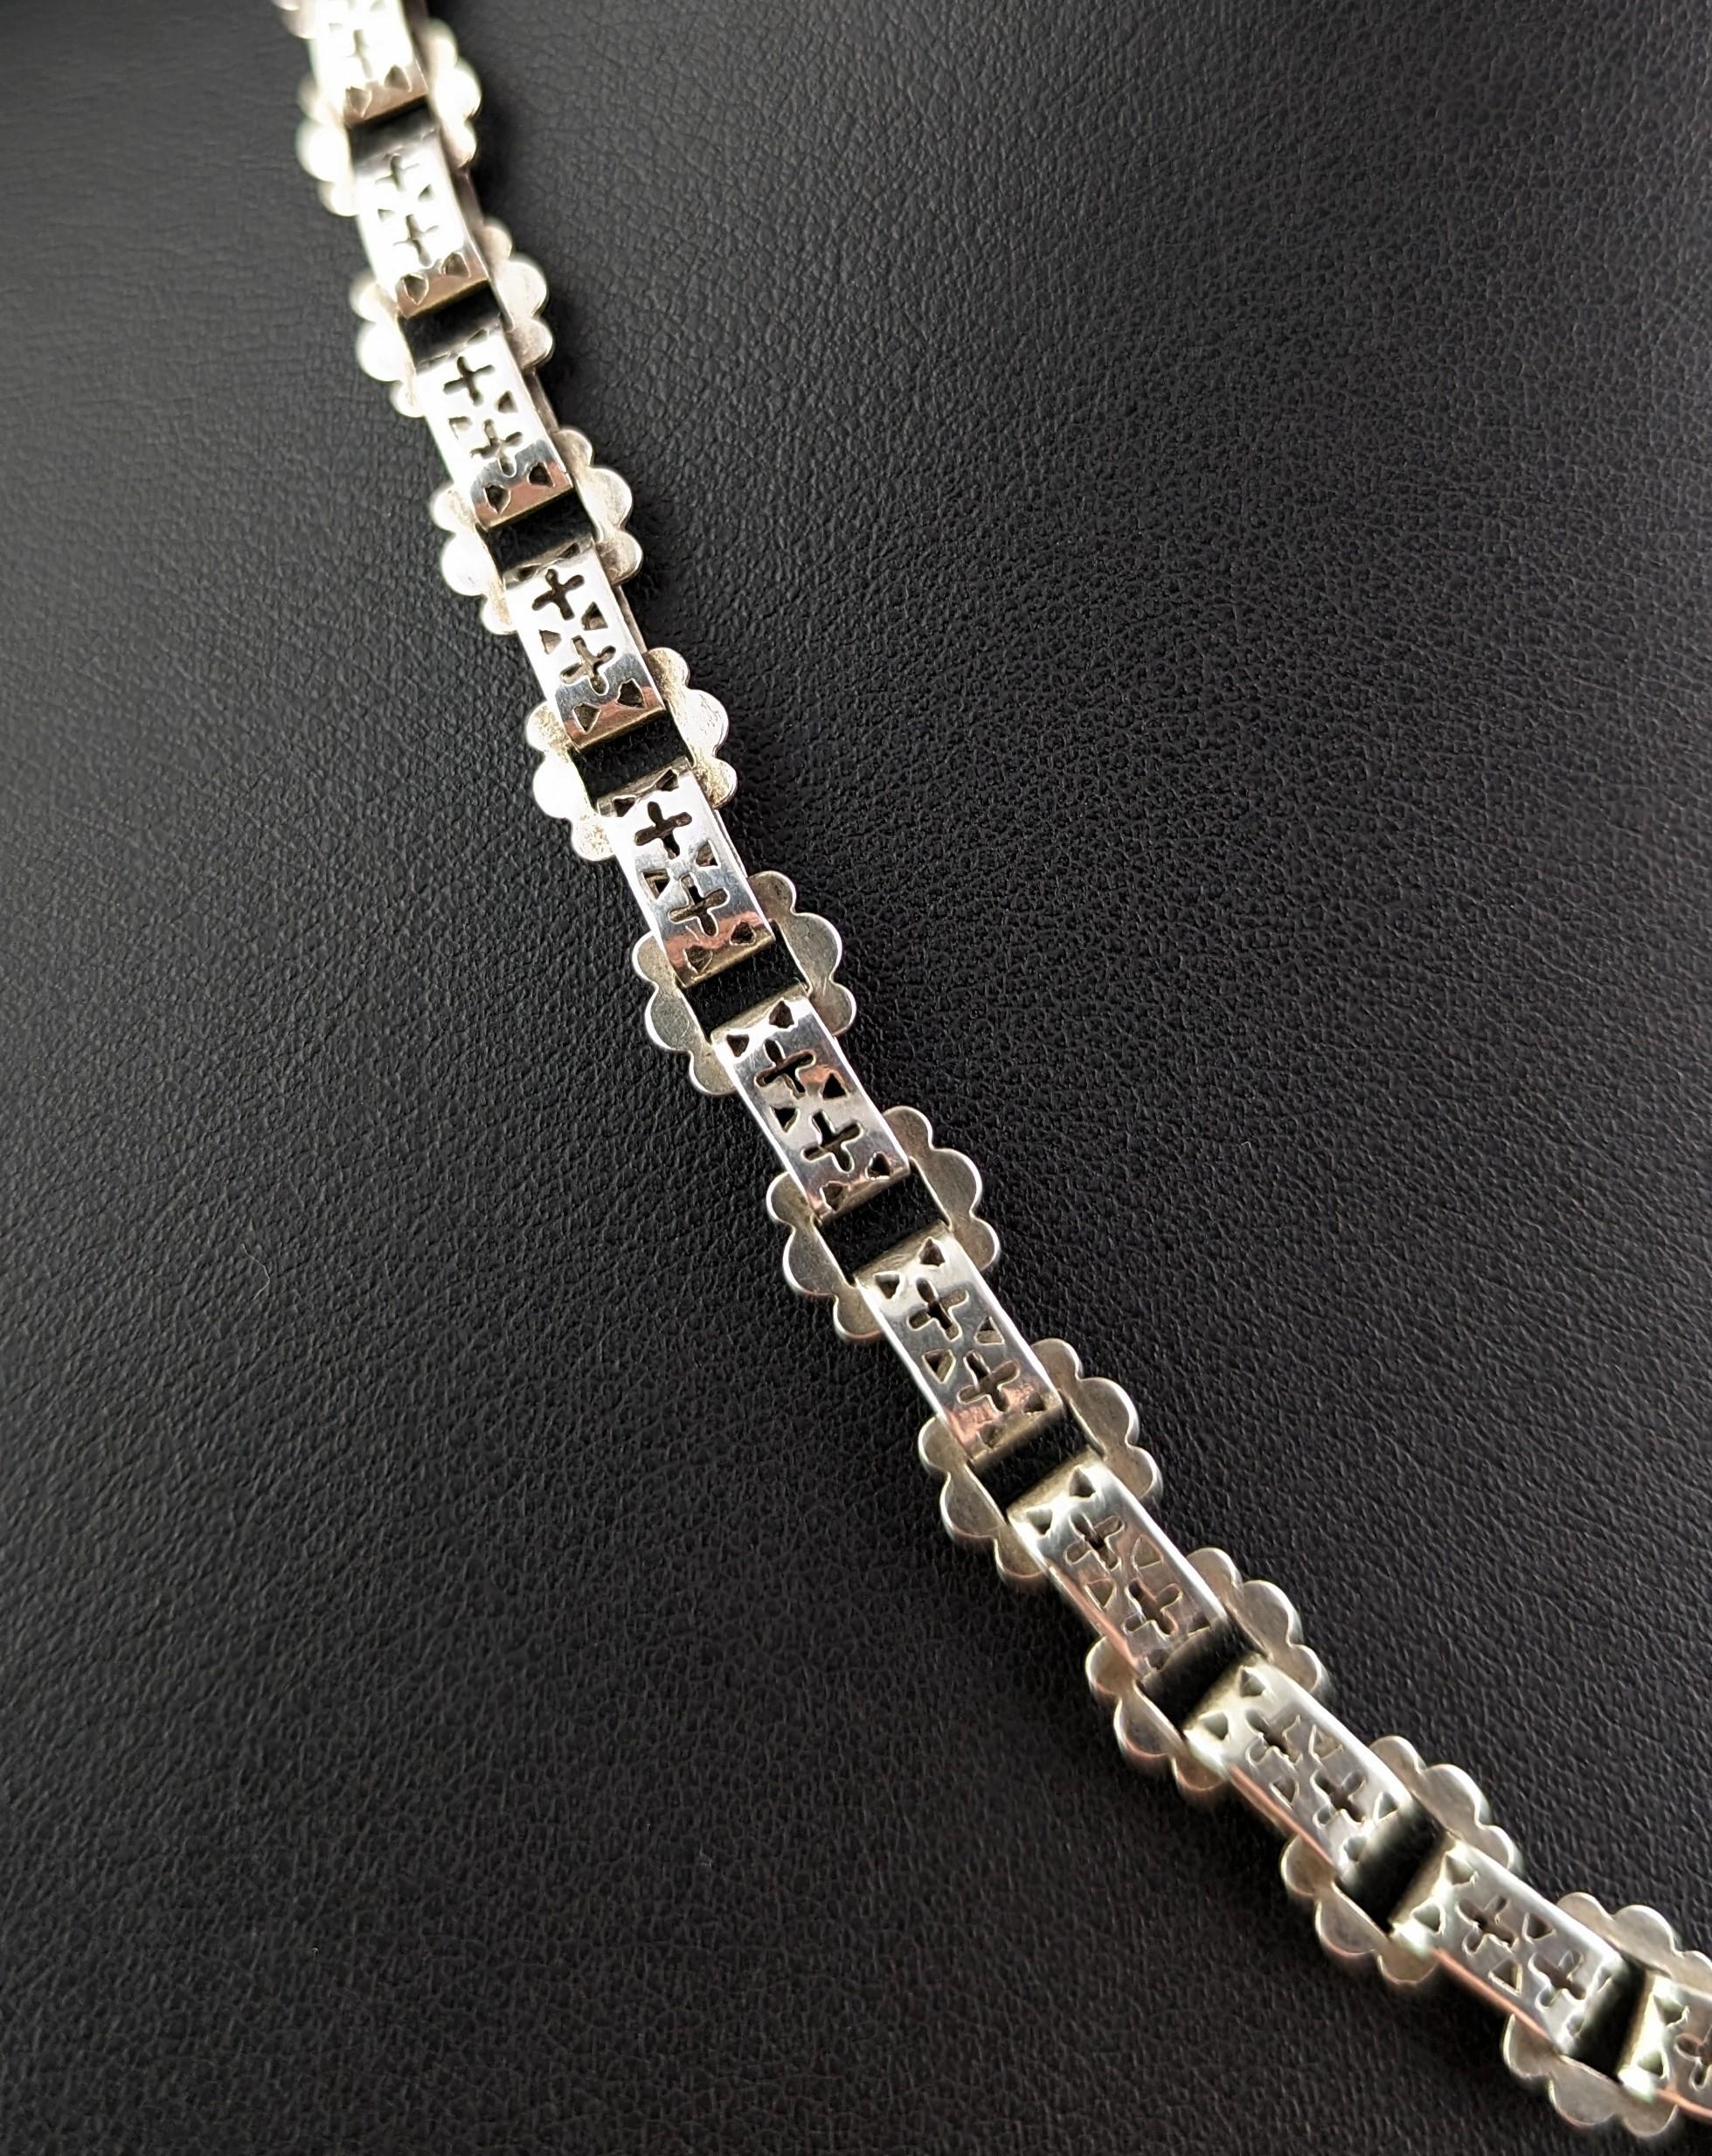 Antique Silver Book Chain Necklace, Victorian Collar 6